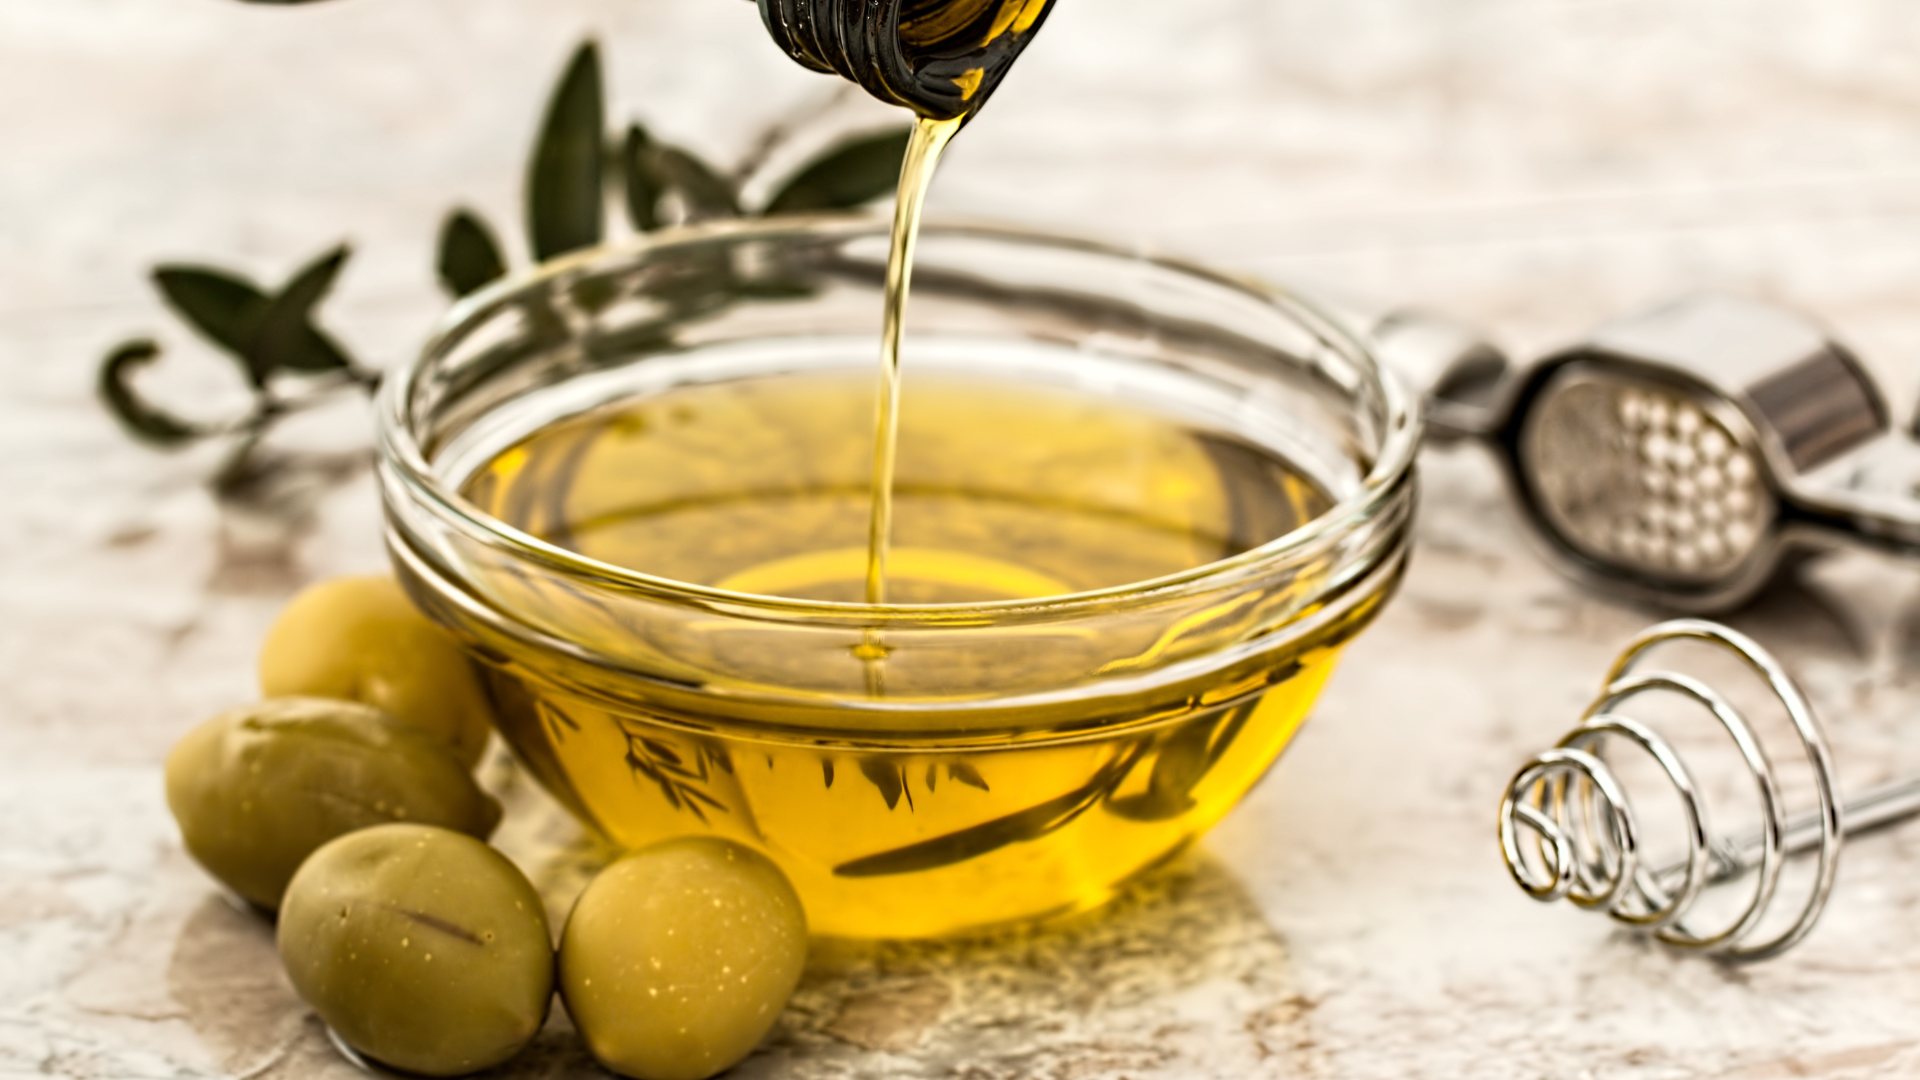 Assemblage et dégustation d'huile d'olive